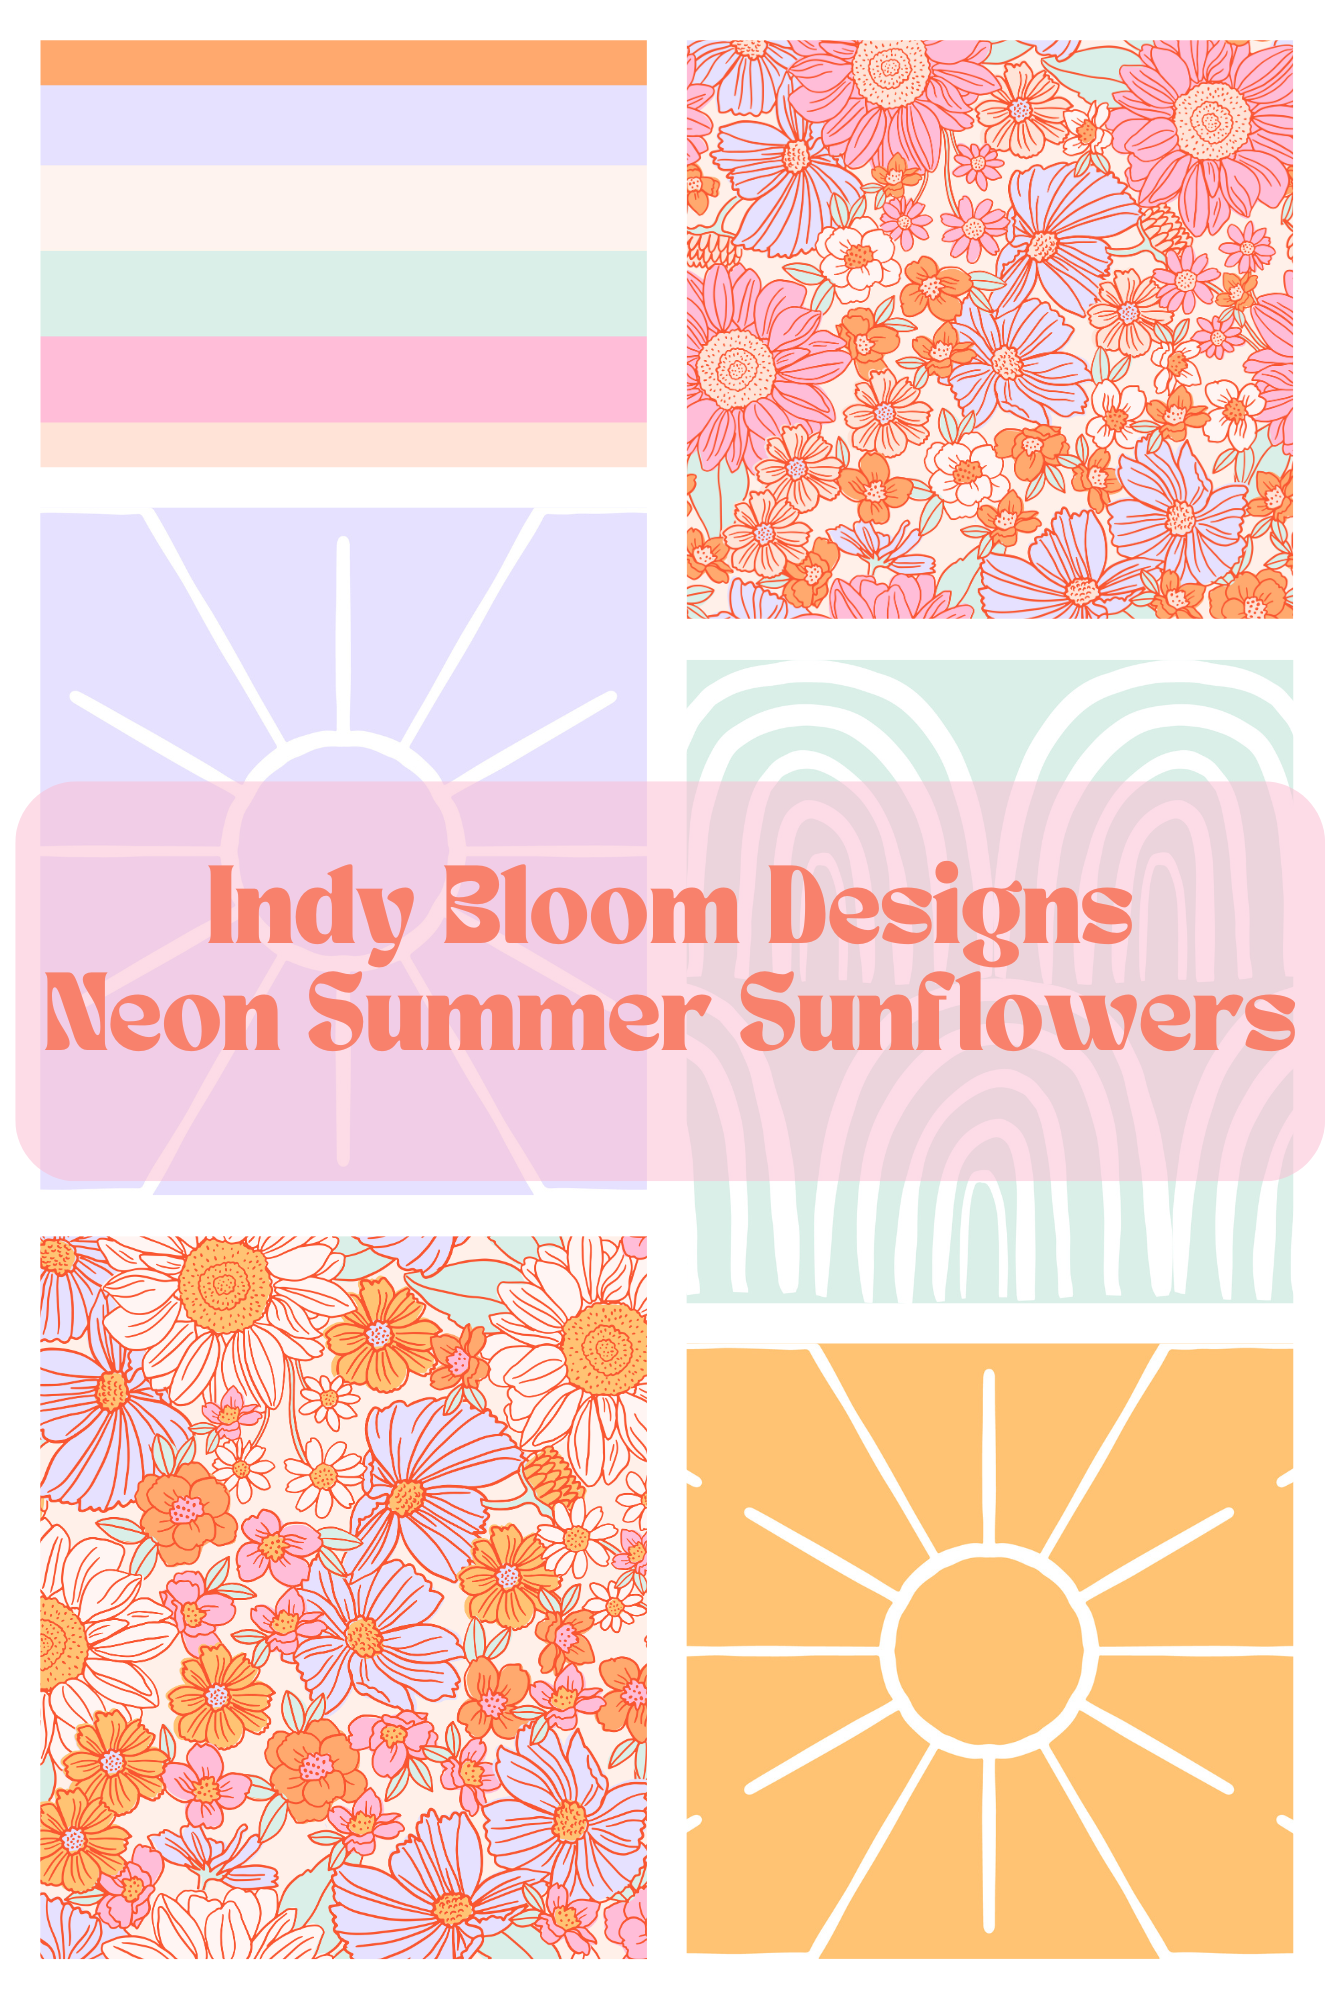 Neon summer sunflowers